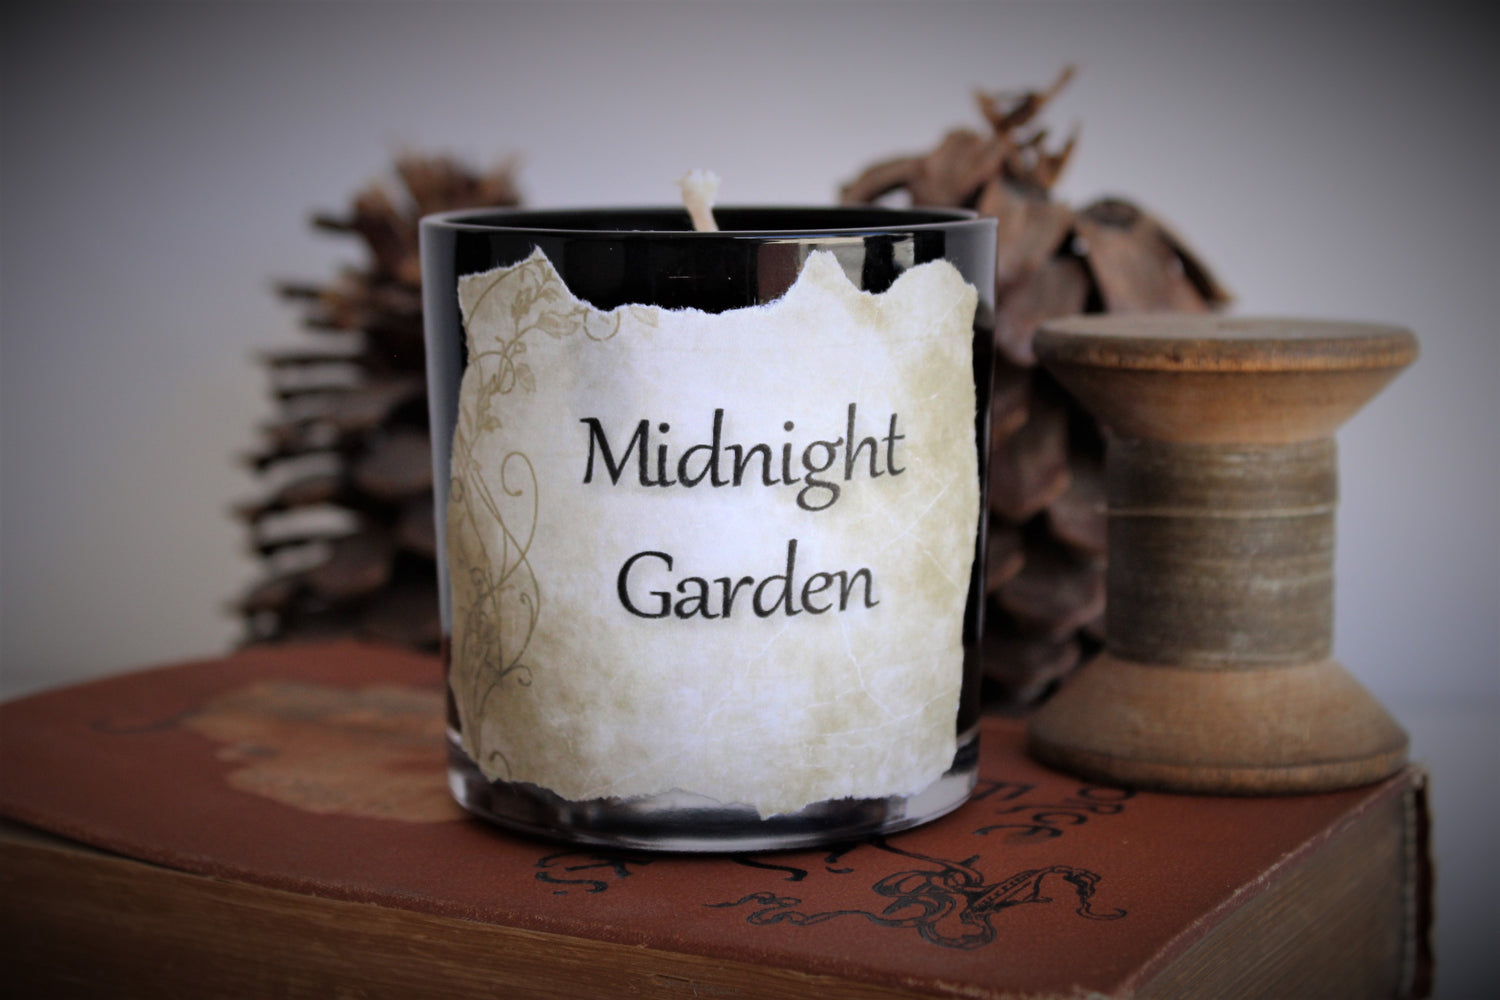 "Midnight Garden" Orange Blossom Scented Candle